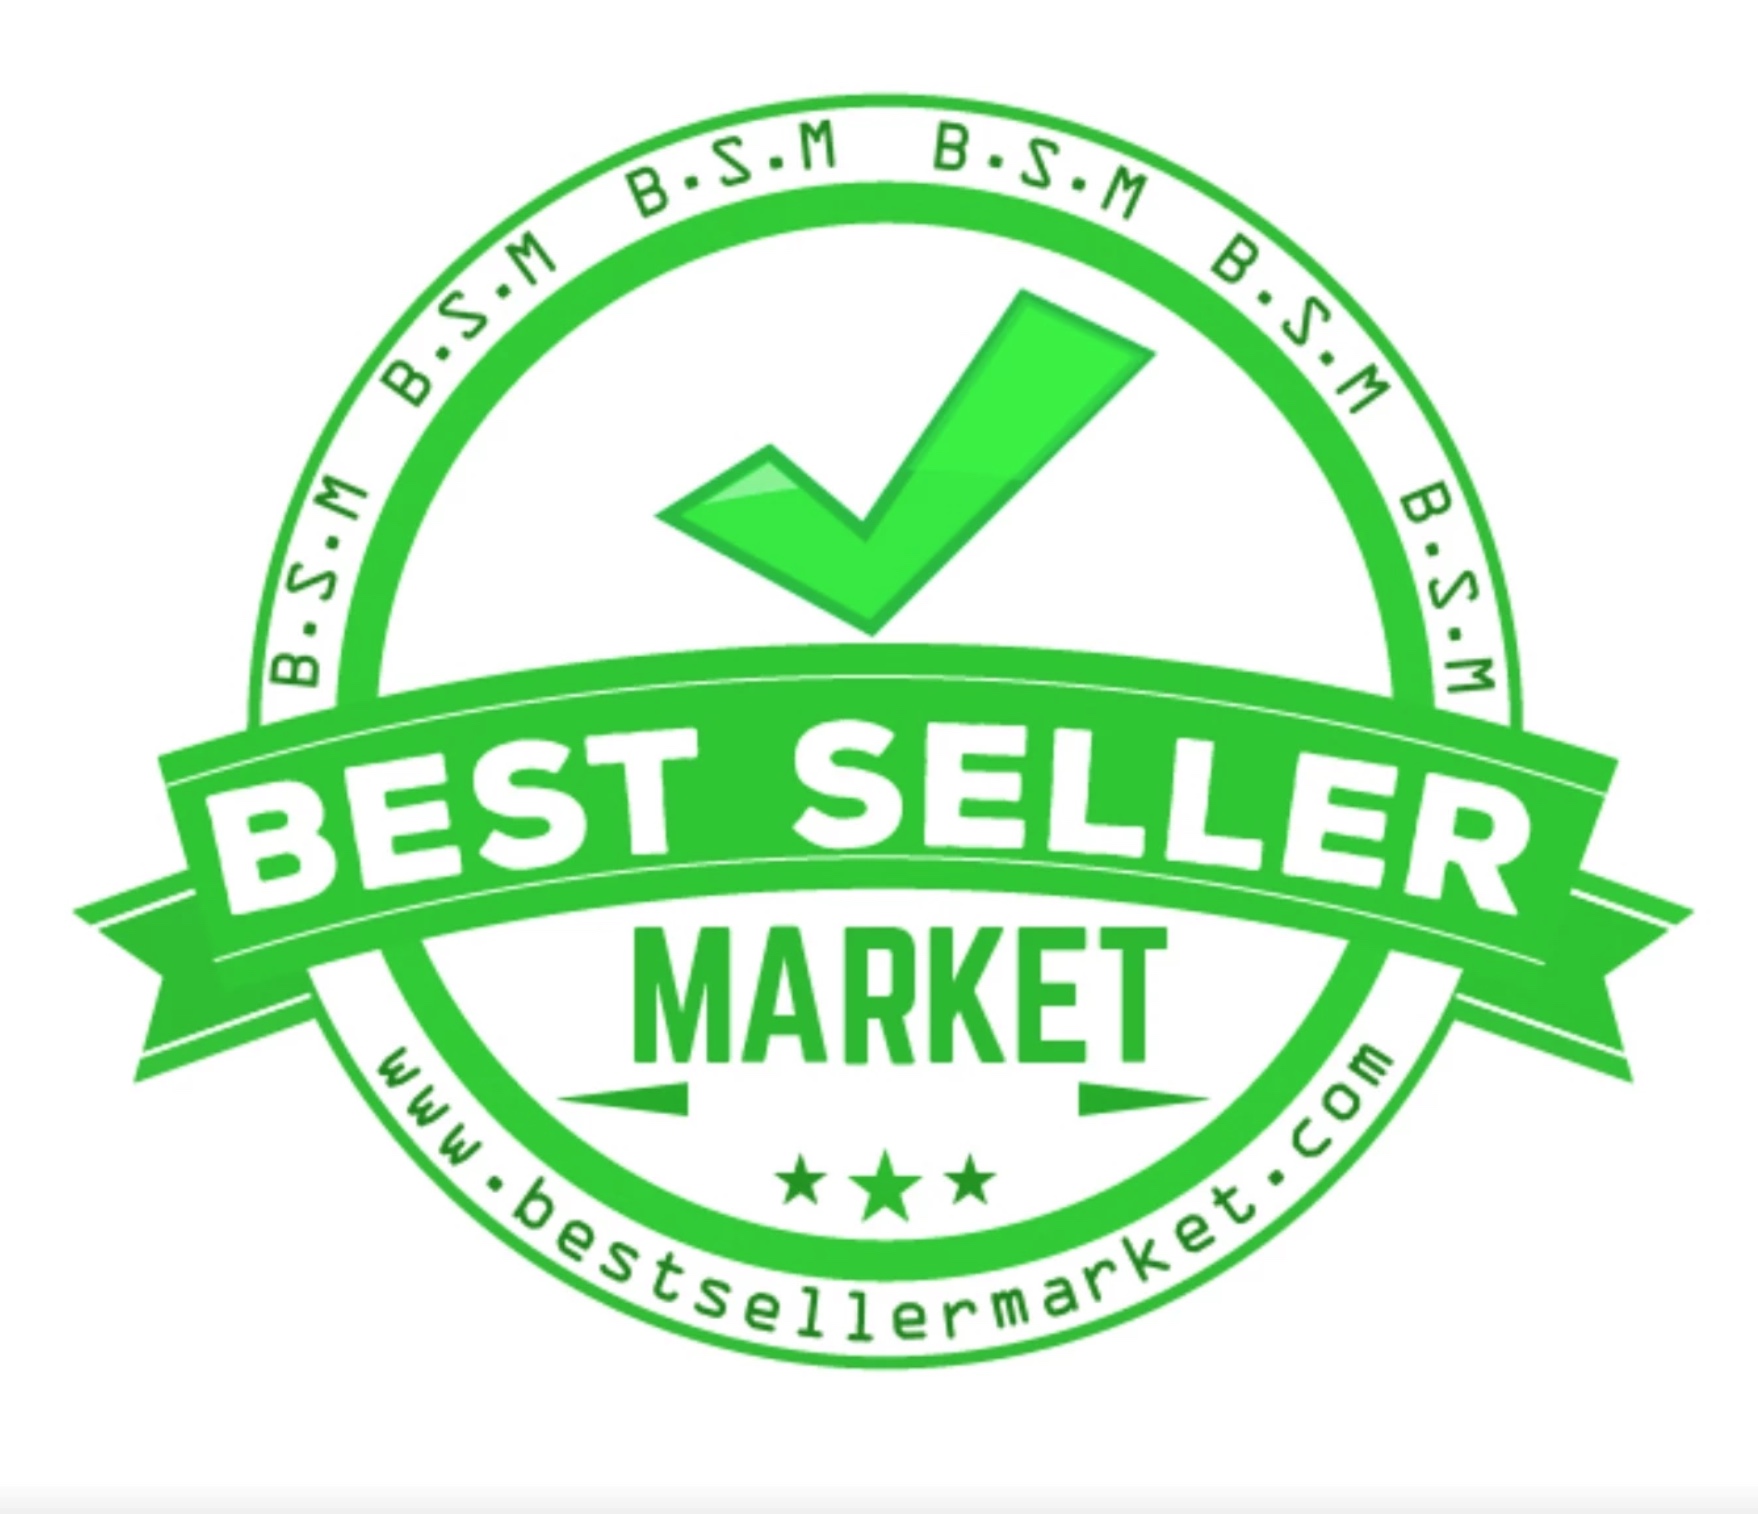 bestsellermarket logo.jpg